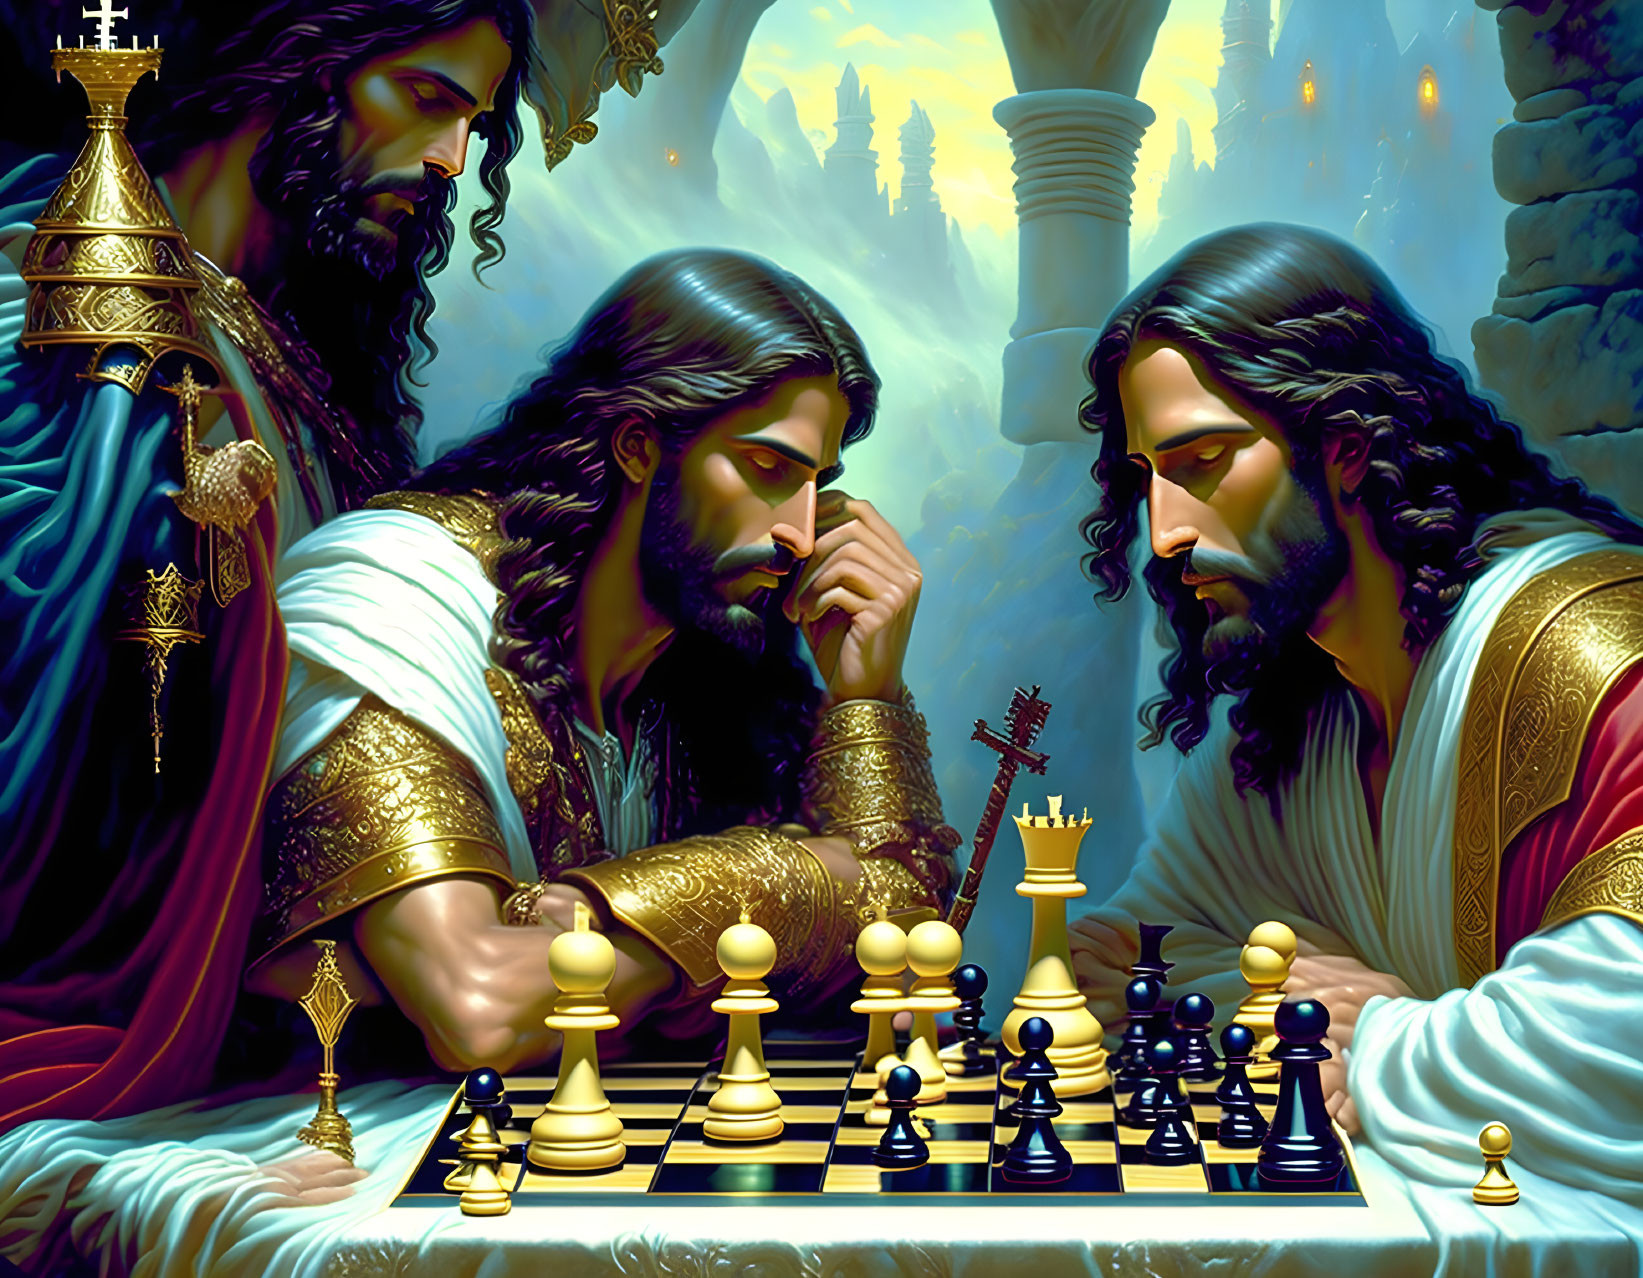 Jesus v.s. Satan Chess Match